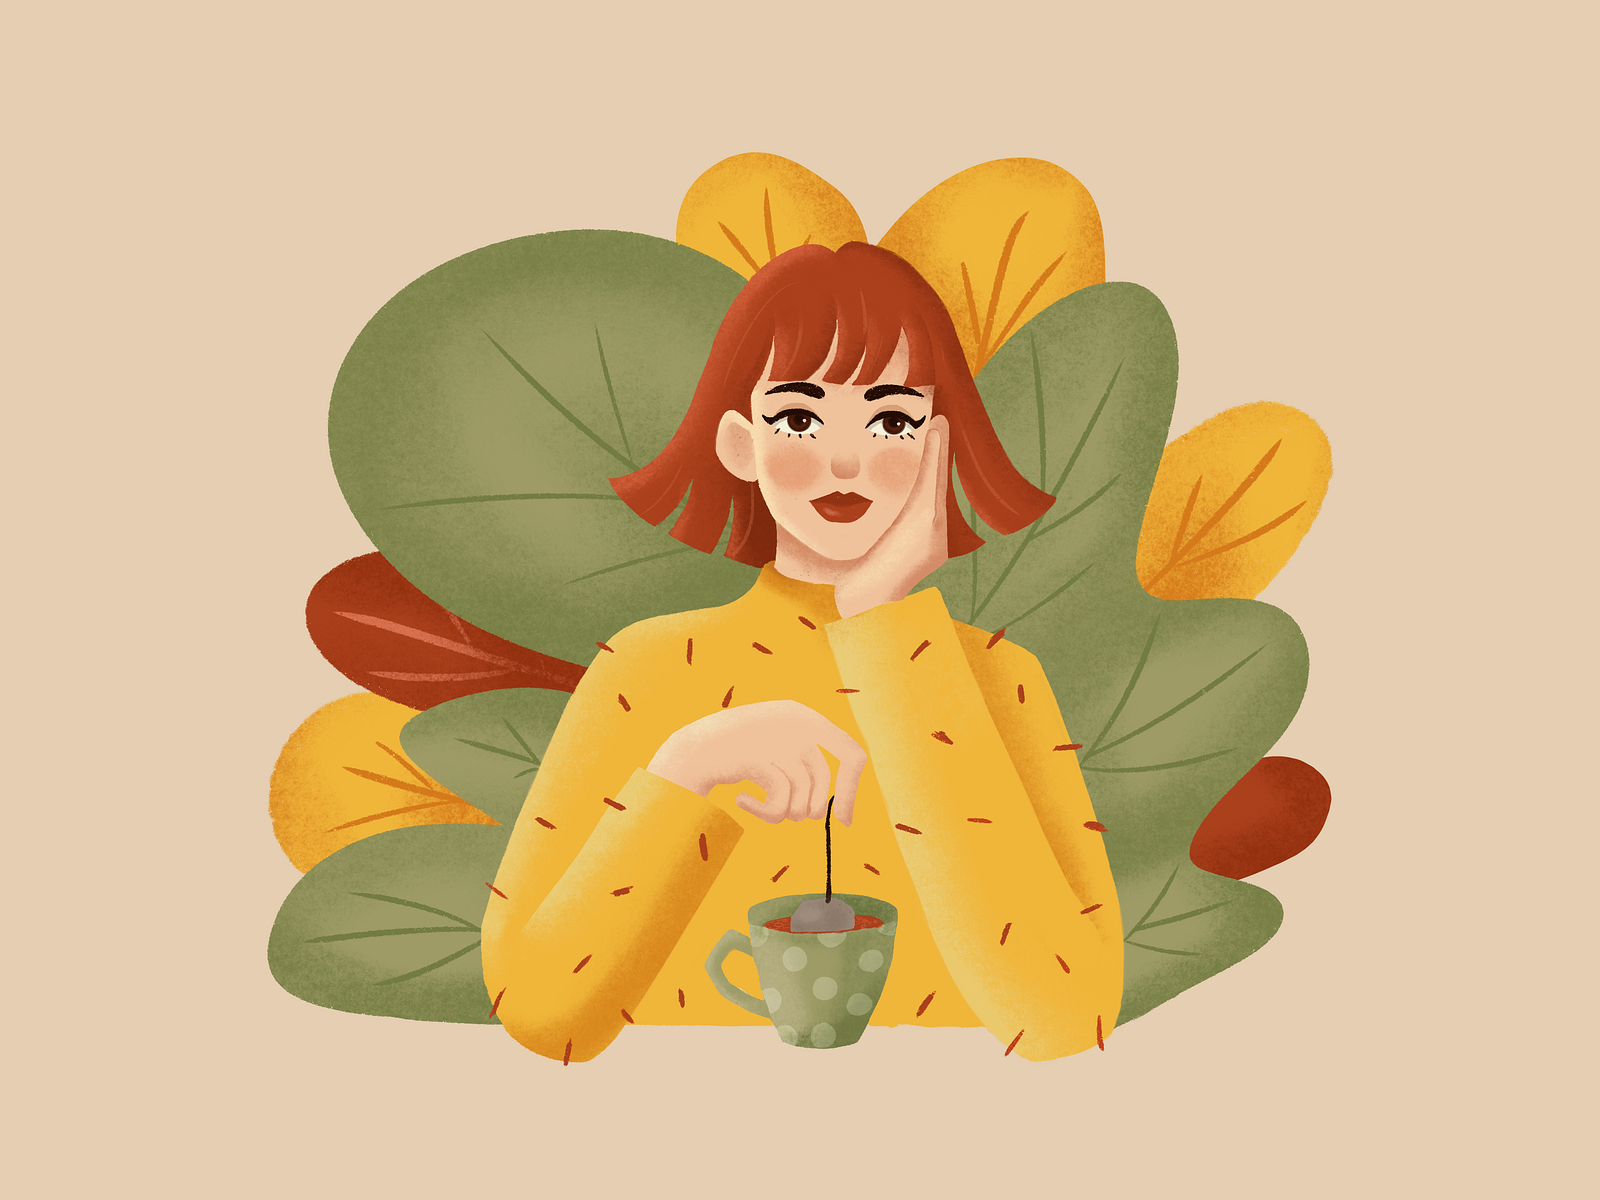 Illustration of Girl with a Tea by Destina Gökoğlu on Dribbble